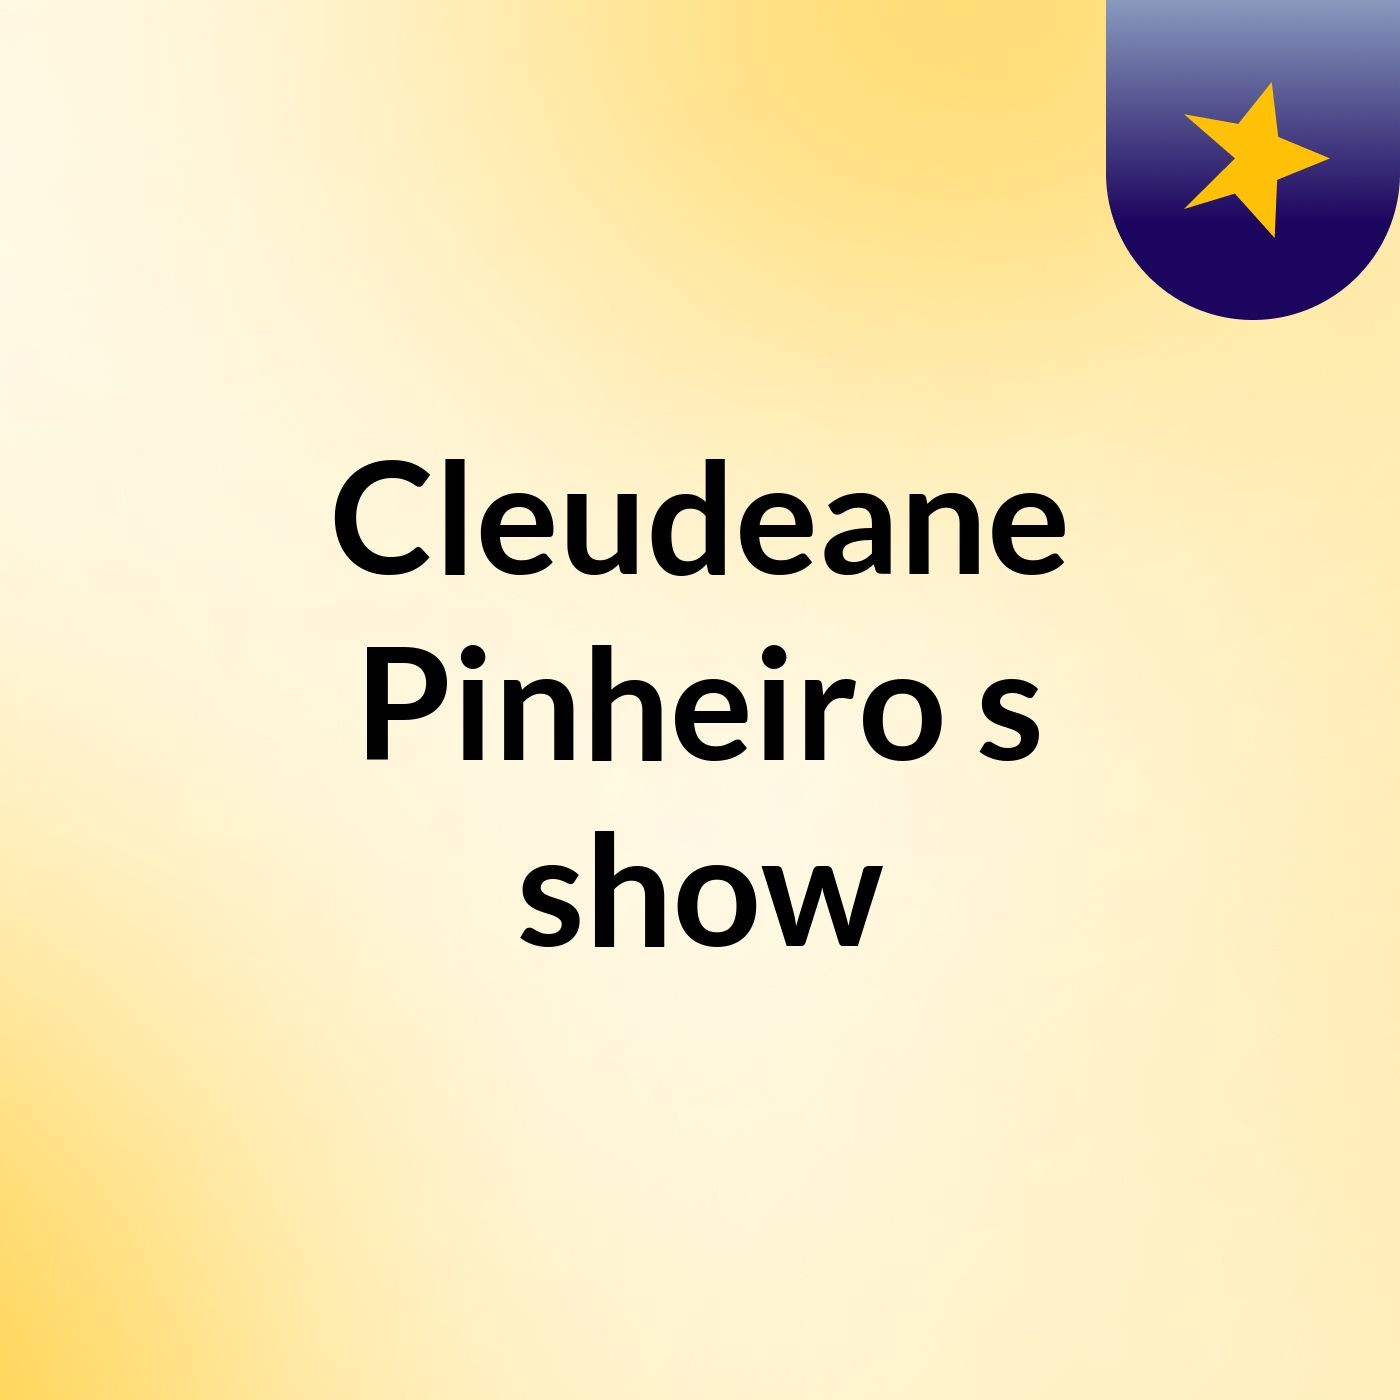 Cleudeane Pinheiro's show